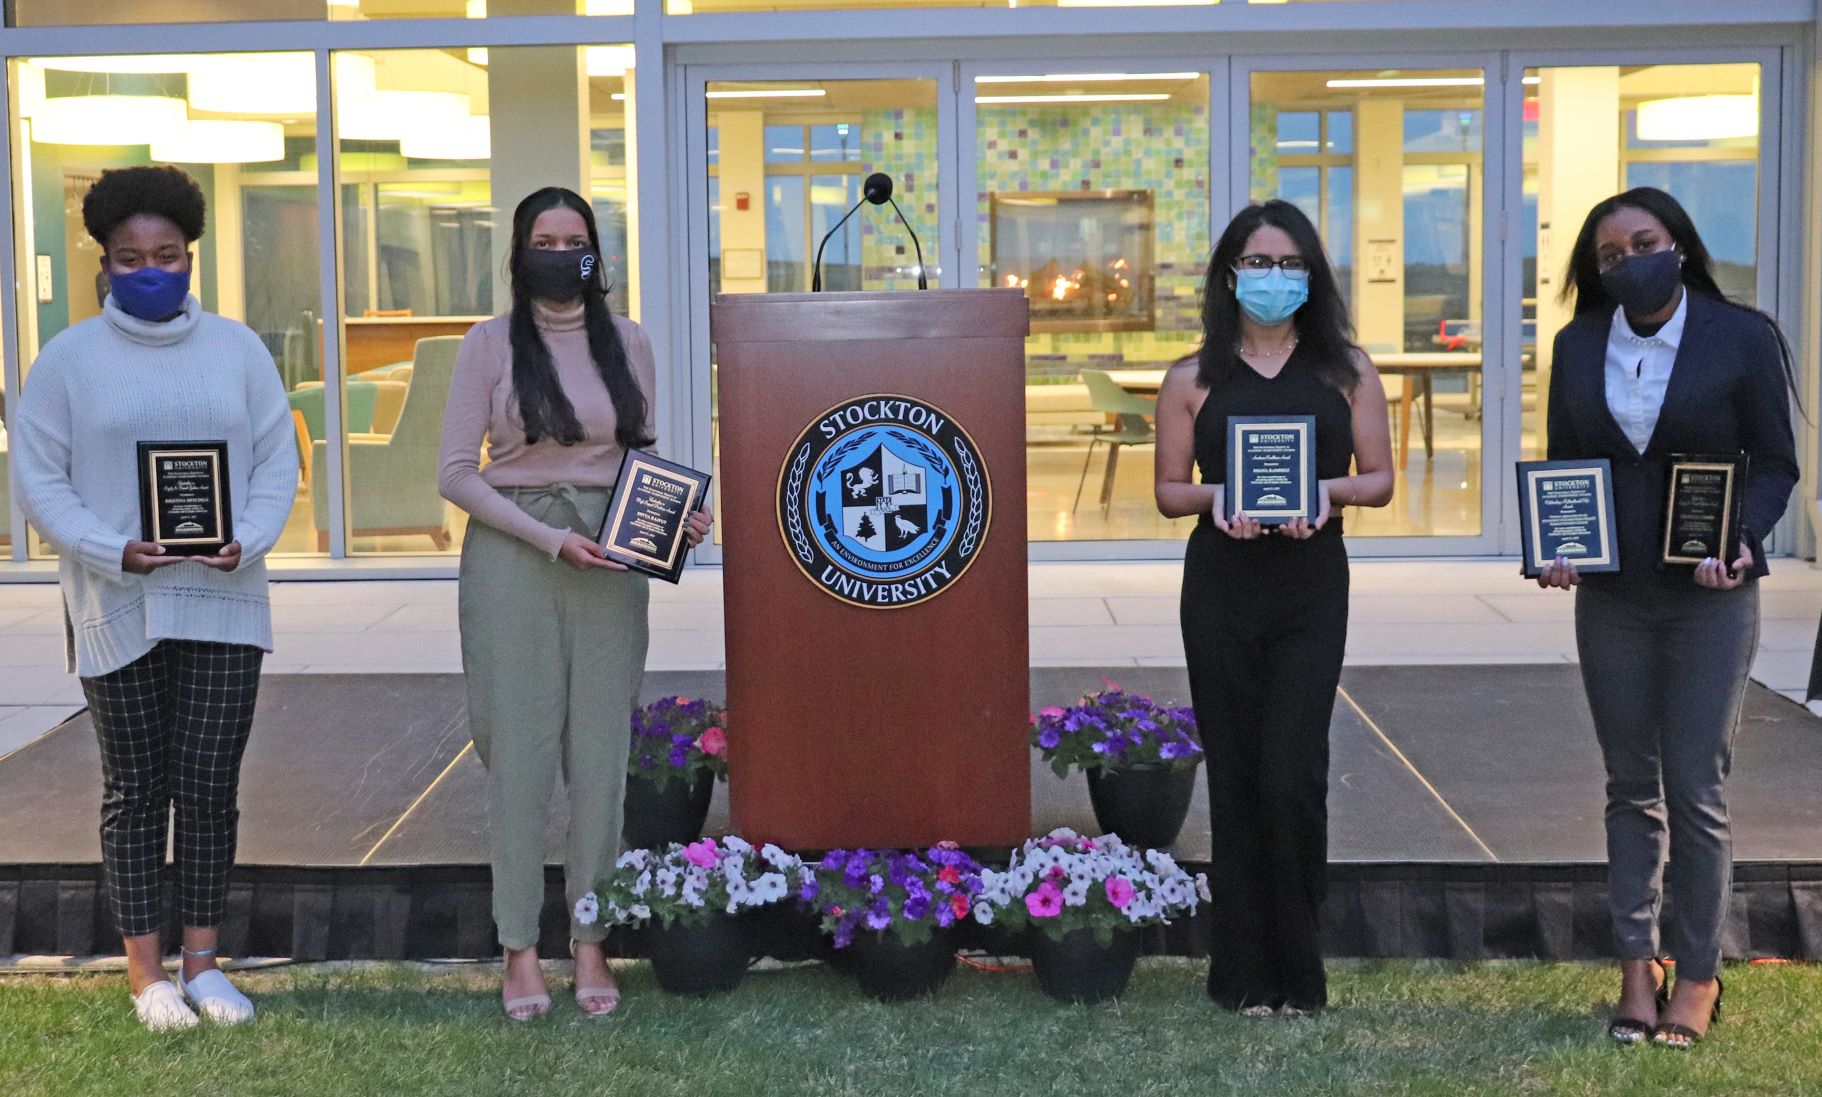 Award winners Kristina Mitchell, Divya Rajput, Diana Ramirez and Danielle Combs pose with their plaques.